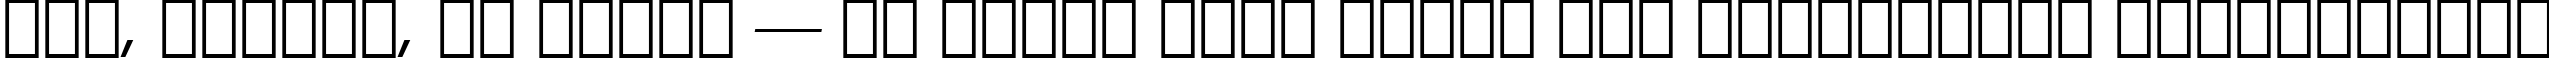 Пример написания шрифтом Geometric 415 Lite Italic BT текста на украинском